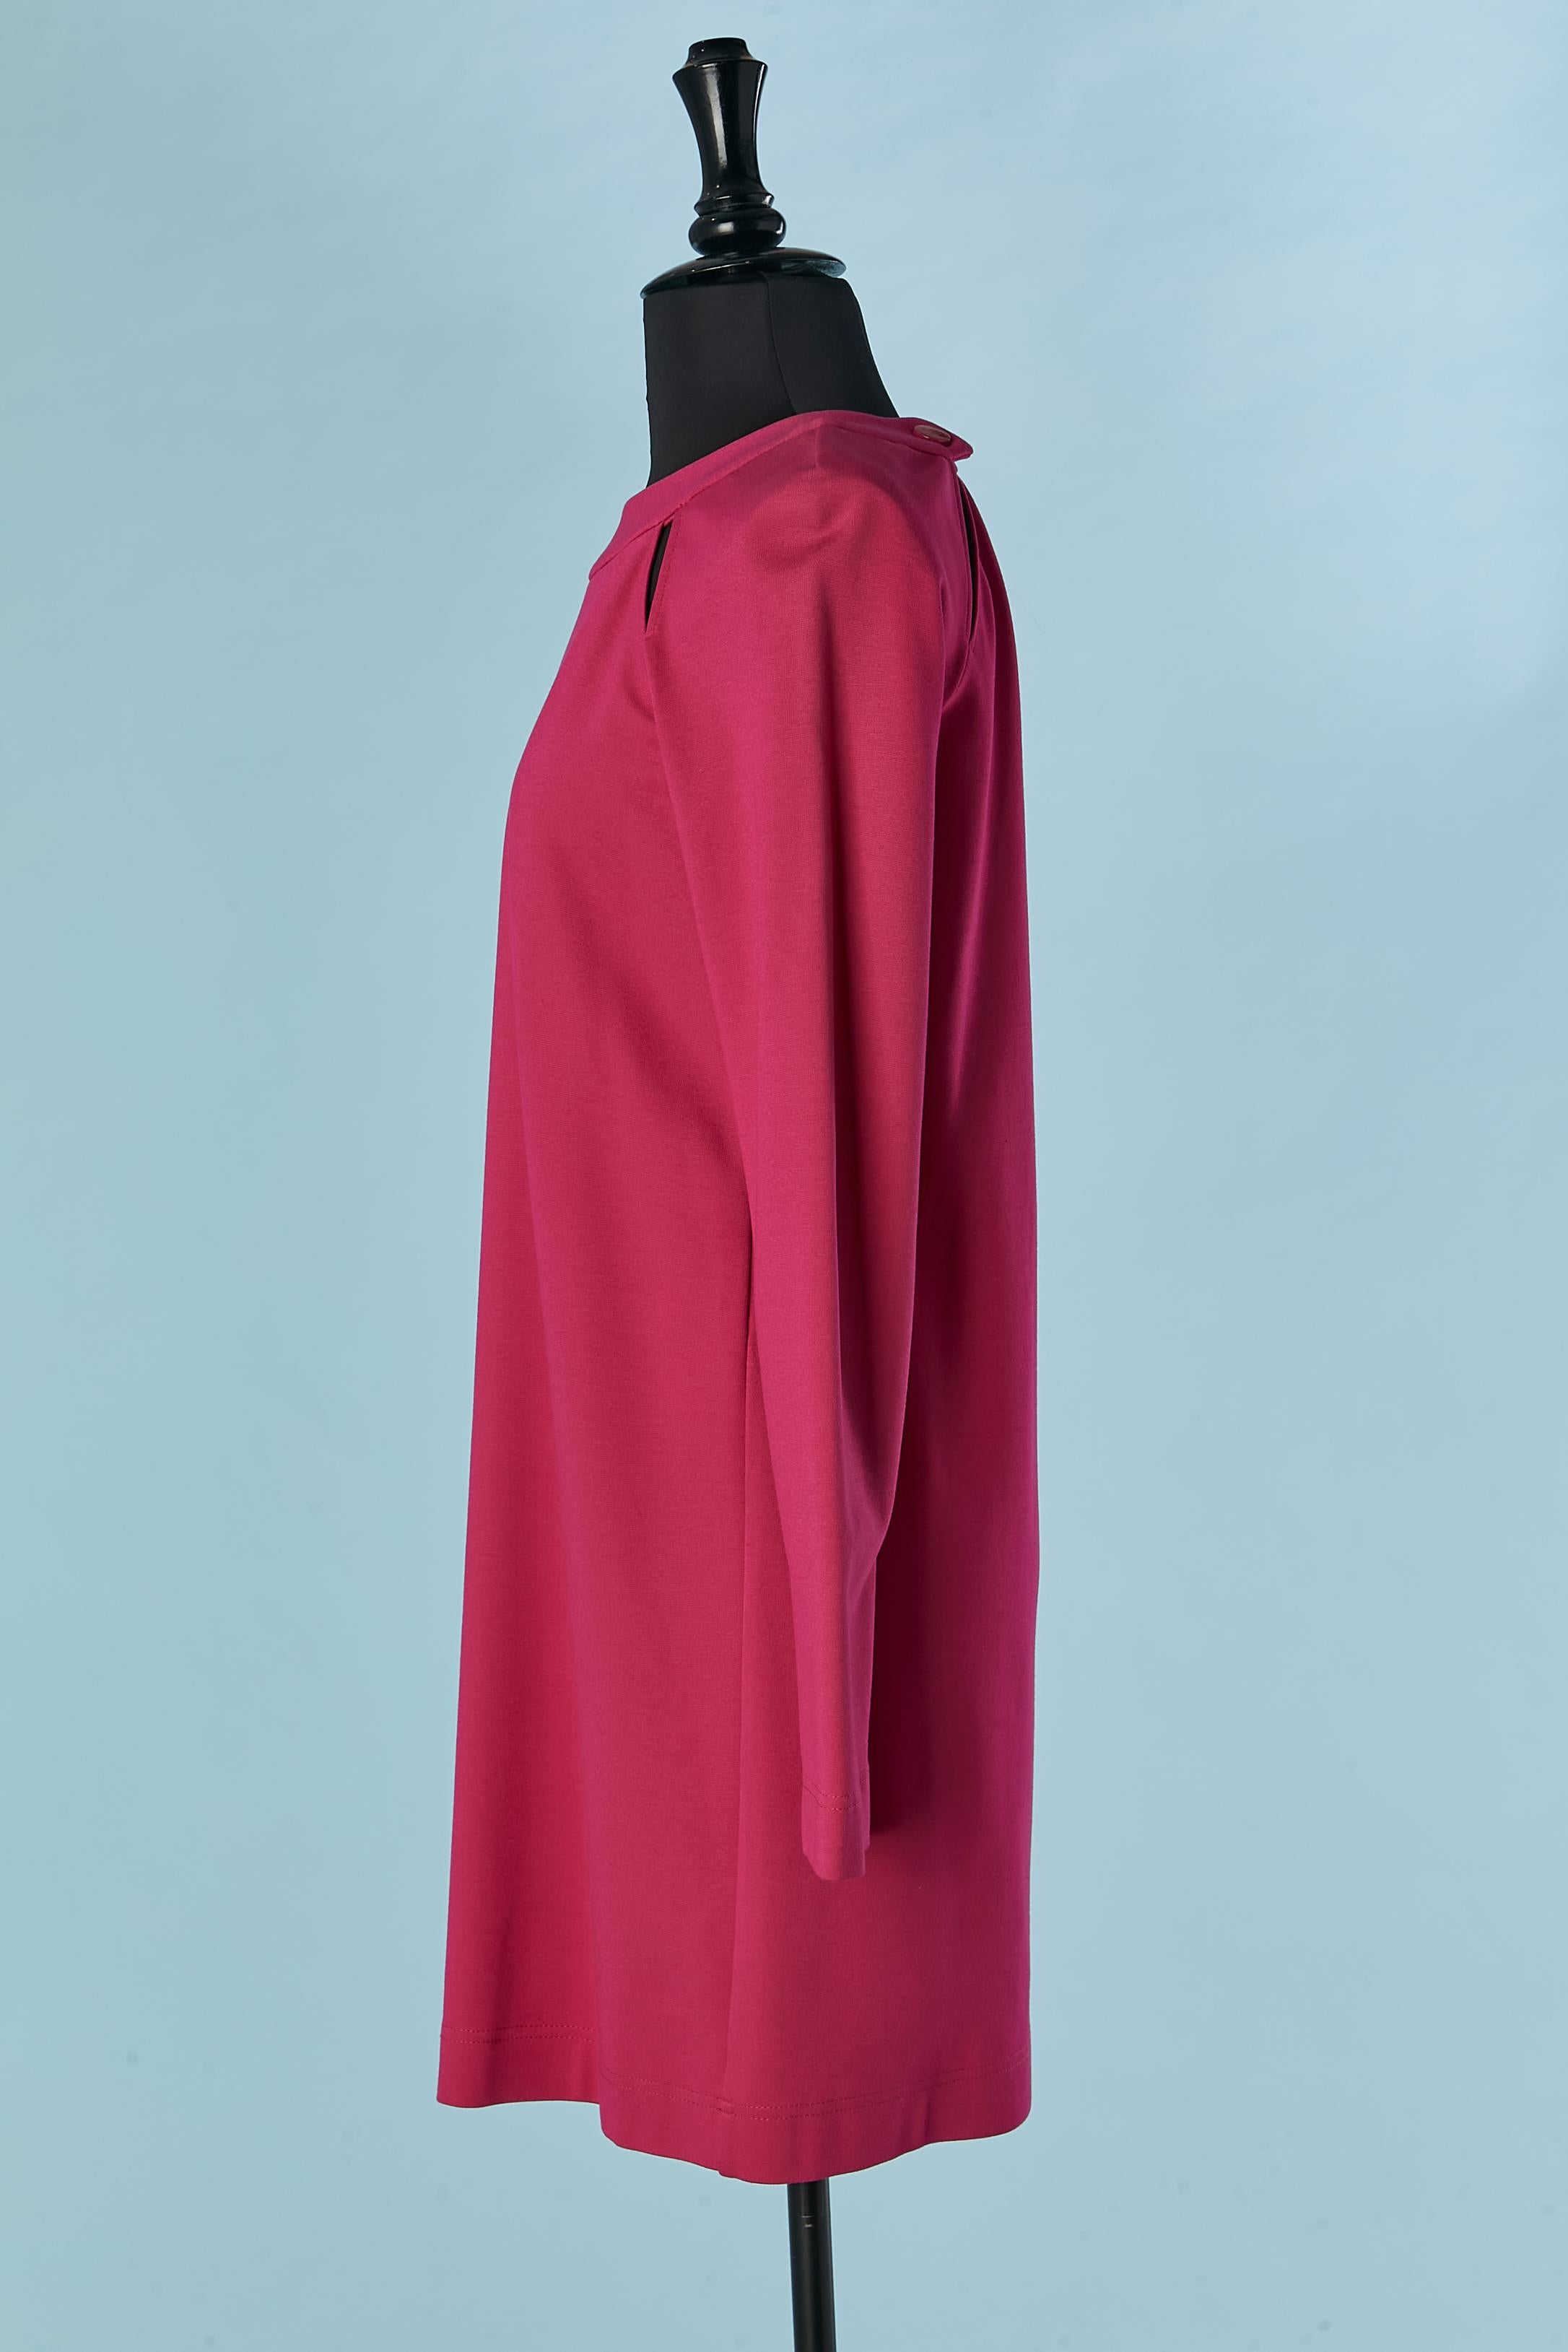 Pink jersey day dress M Missoni  In Excellent Condition For Sale In Saint-Ouen-Sur-Seine, FR